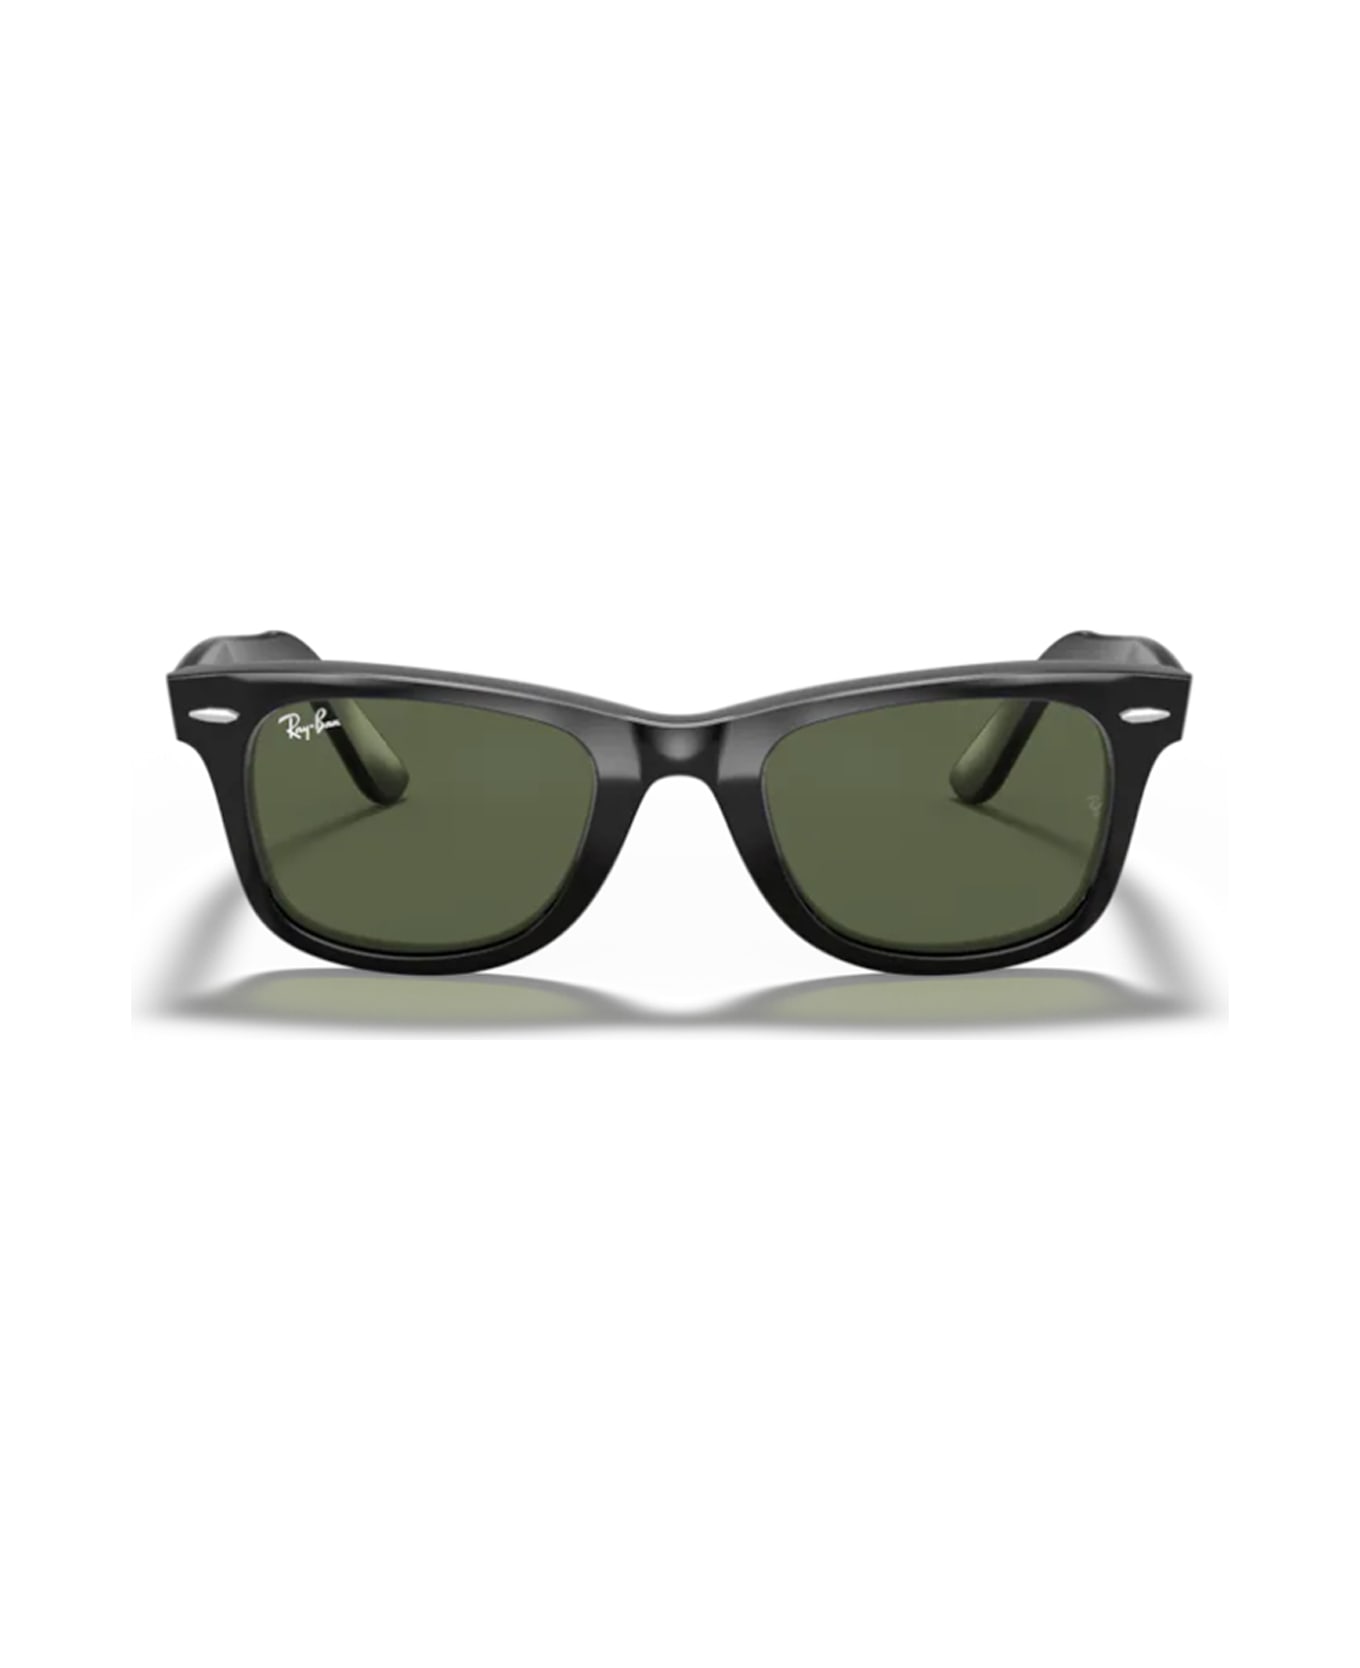 Ray-Ban Original Wayfarer Rb 2140 Sunglasses - Nero